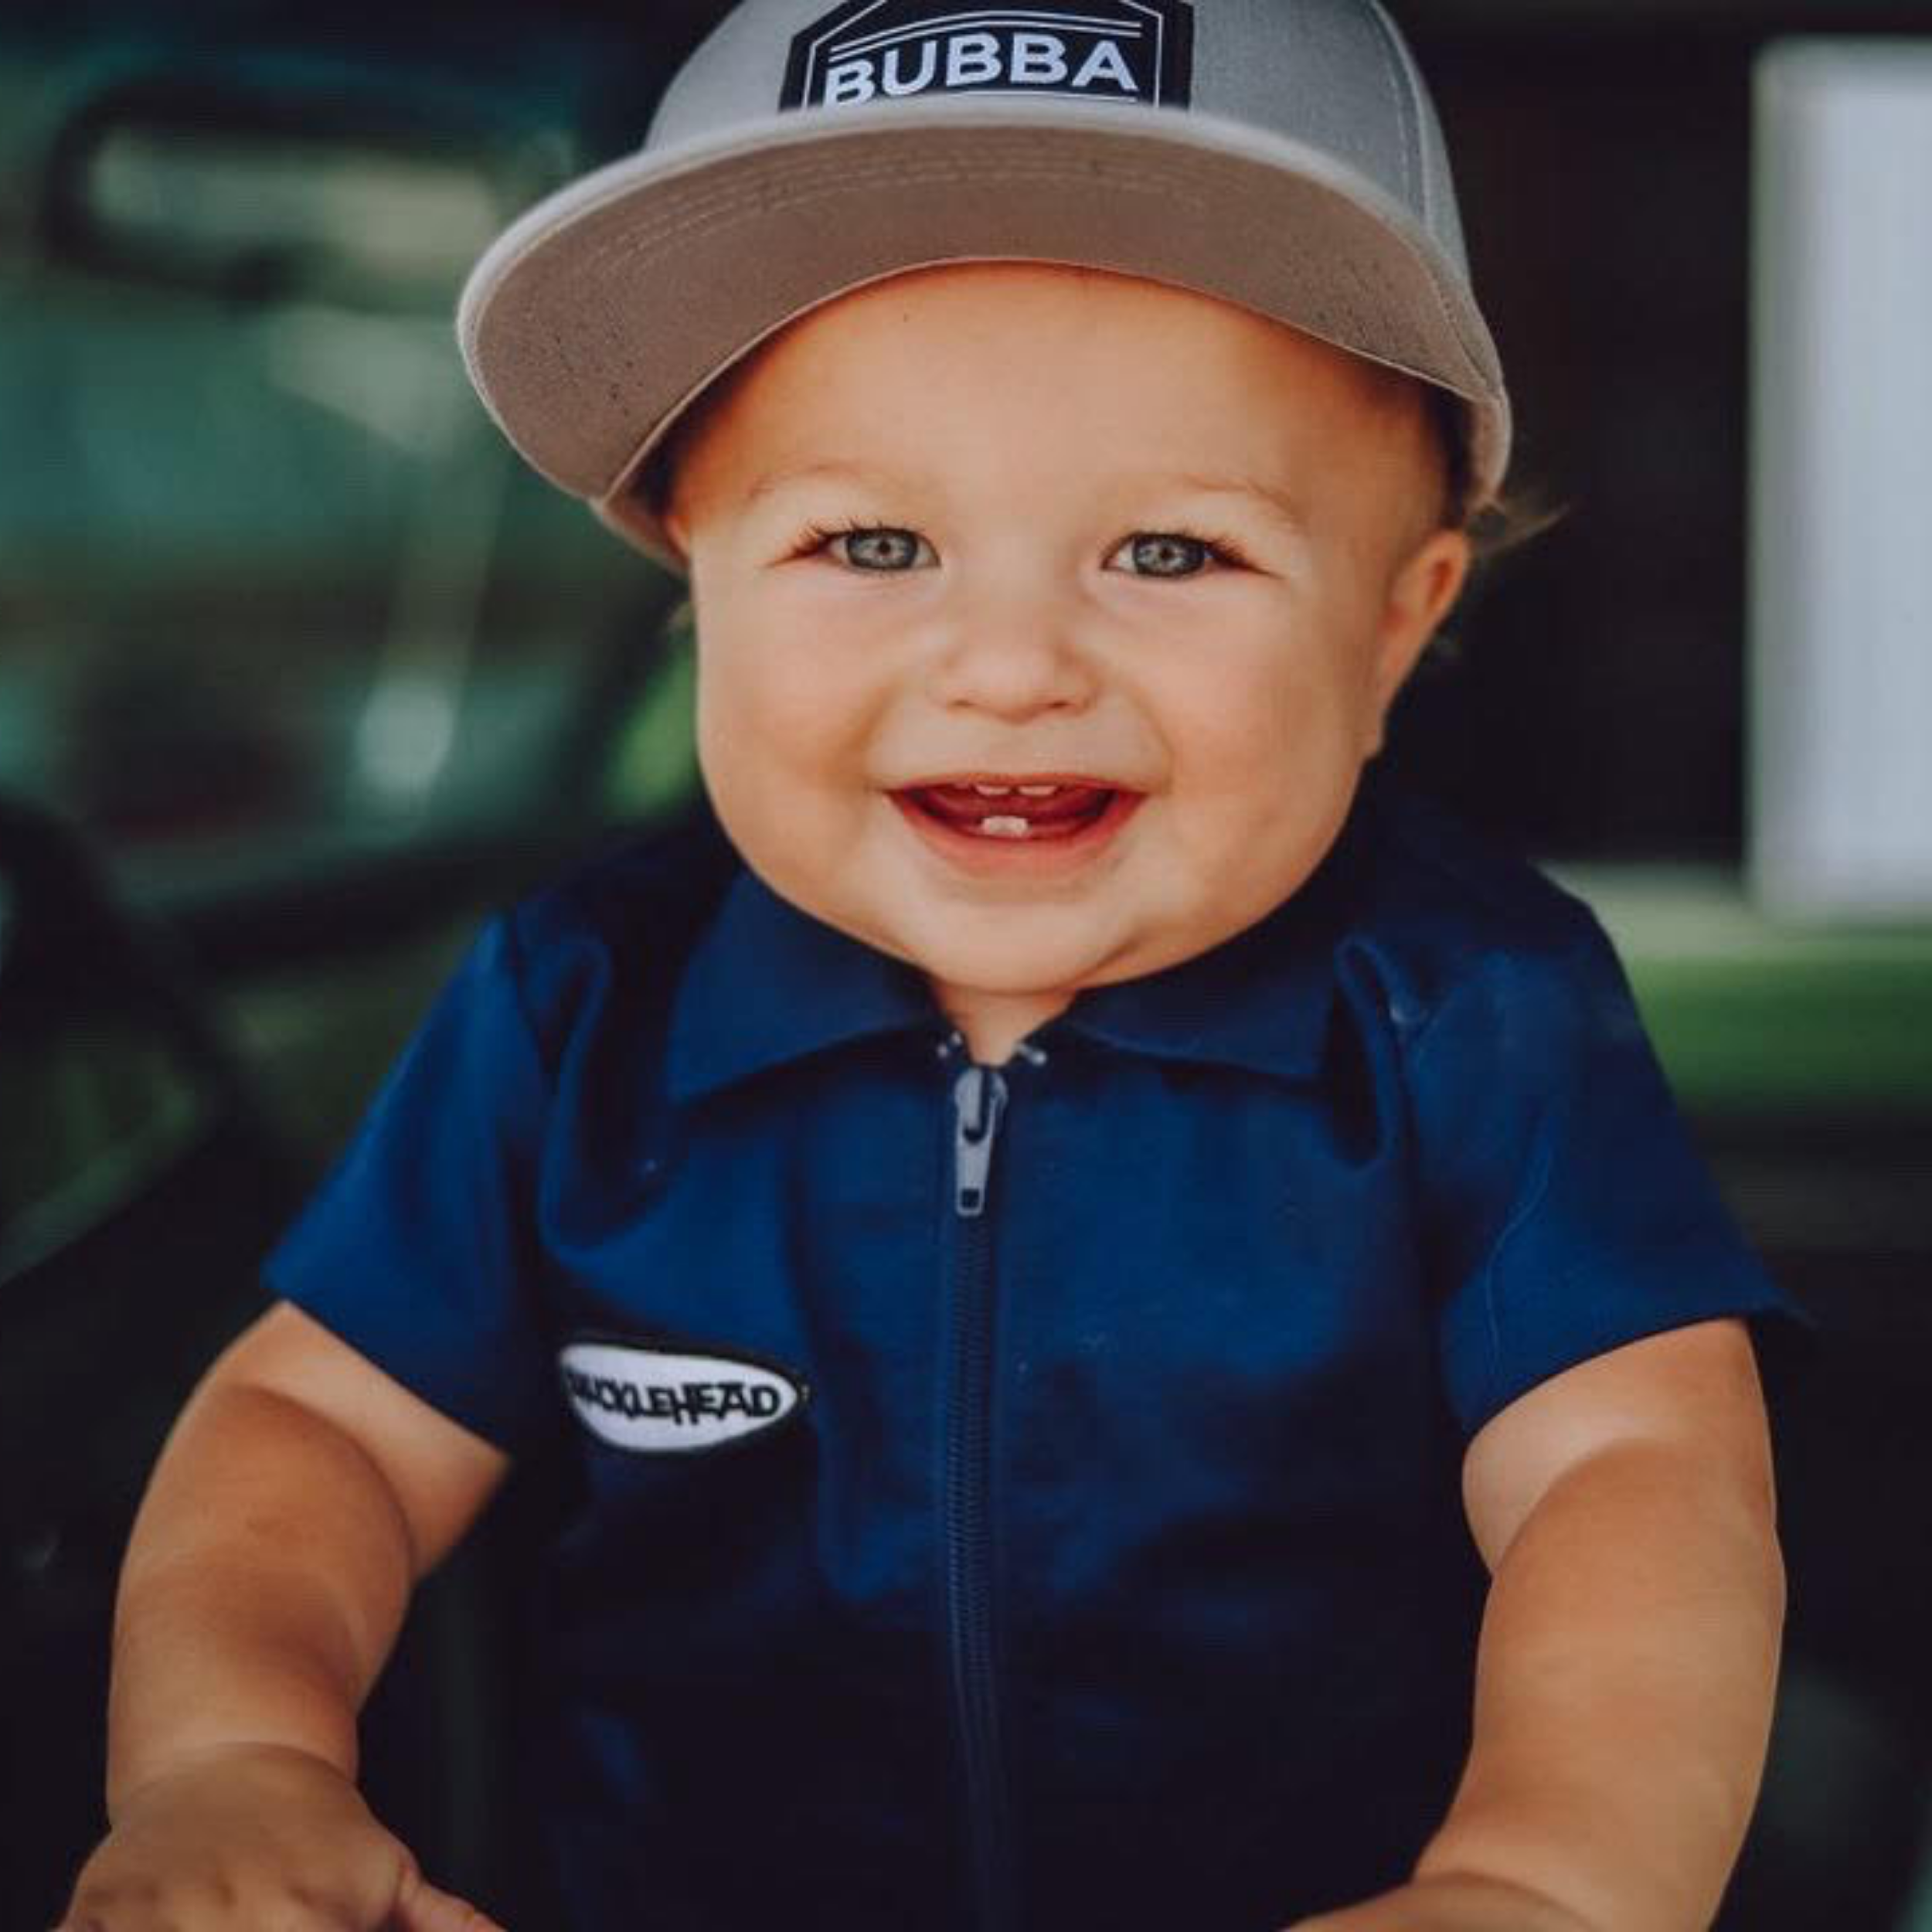 Knuckleheads Baby Boy Youth Bubba Trucker Baseball Adjustable Sun Hat Adjustable Flat Brim Toddler Hat 